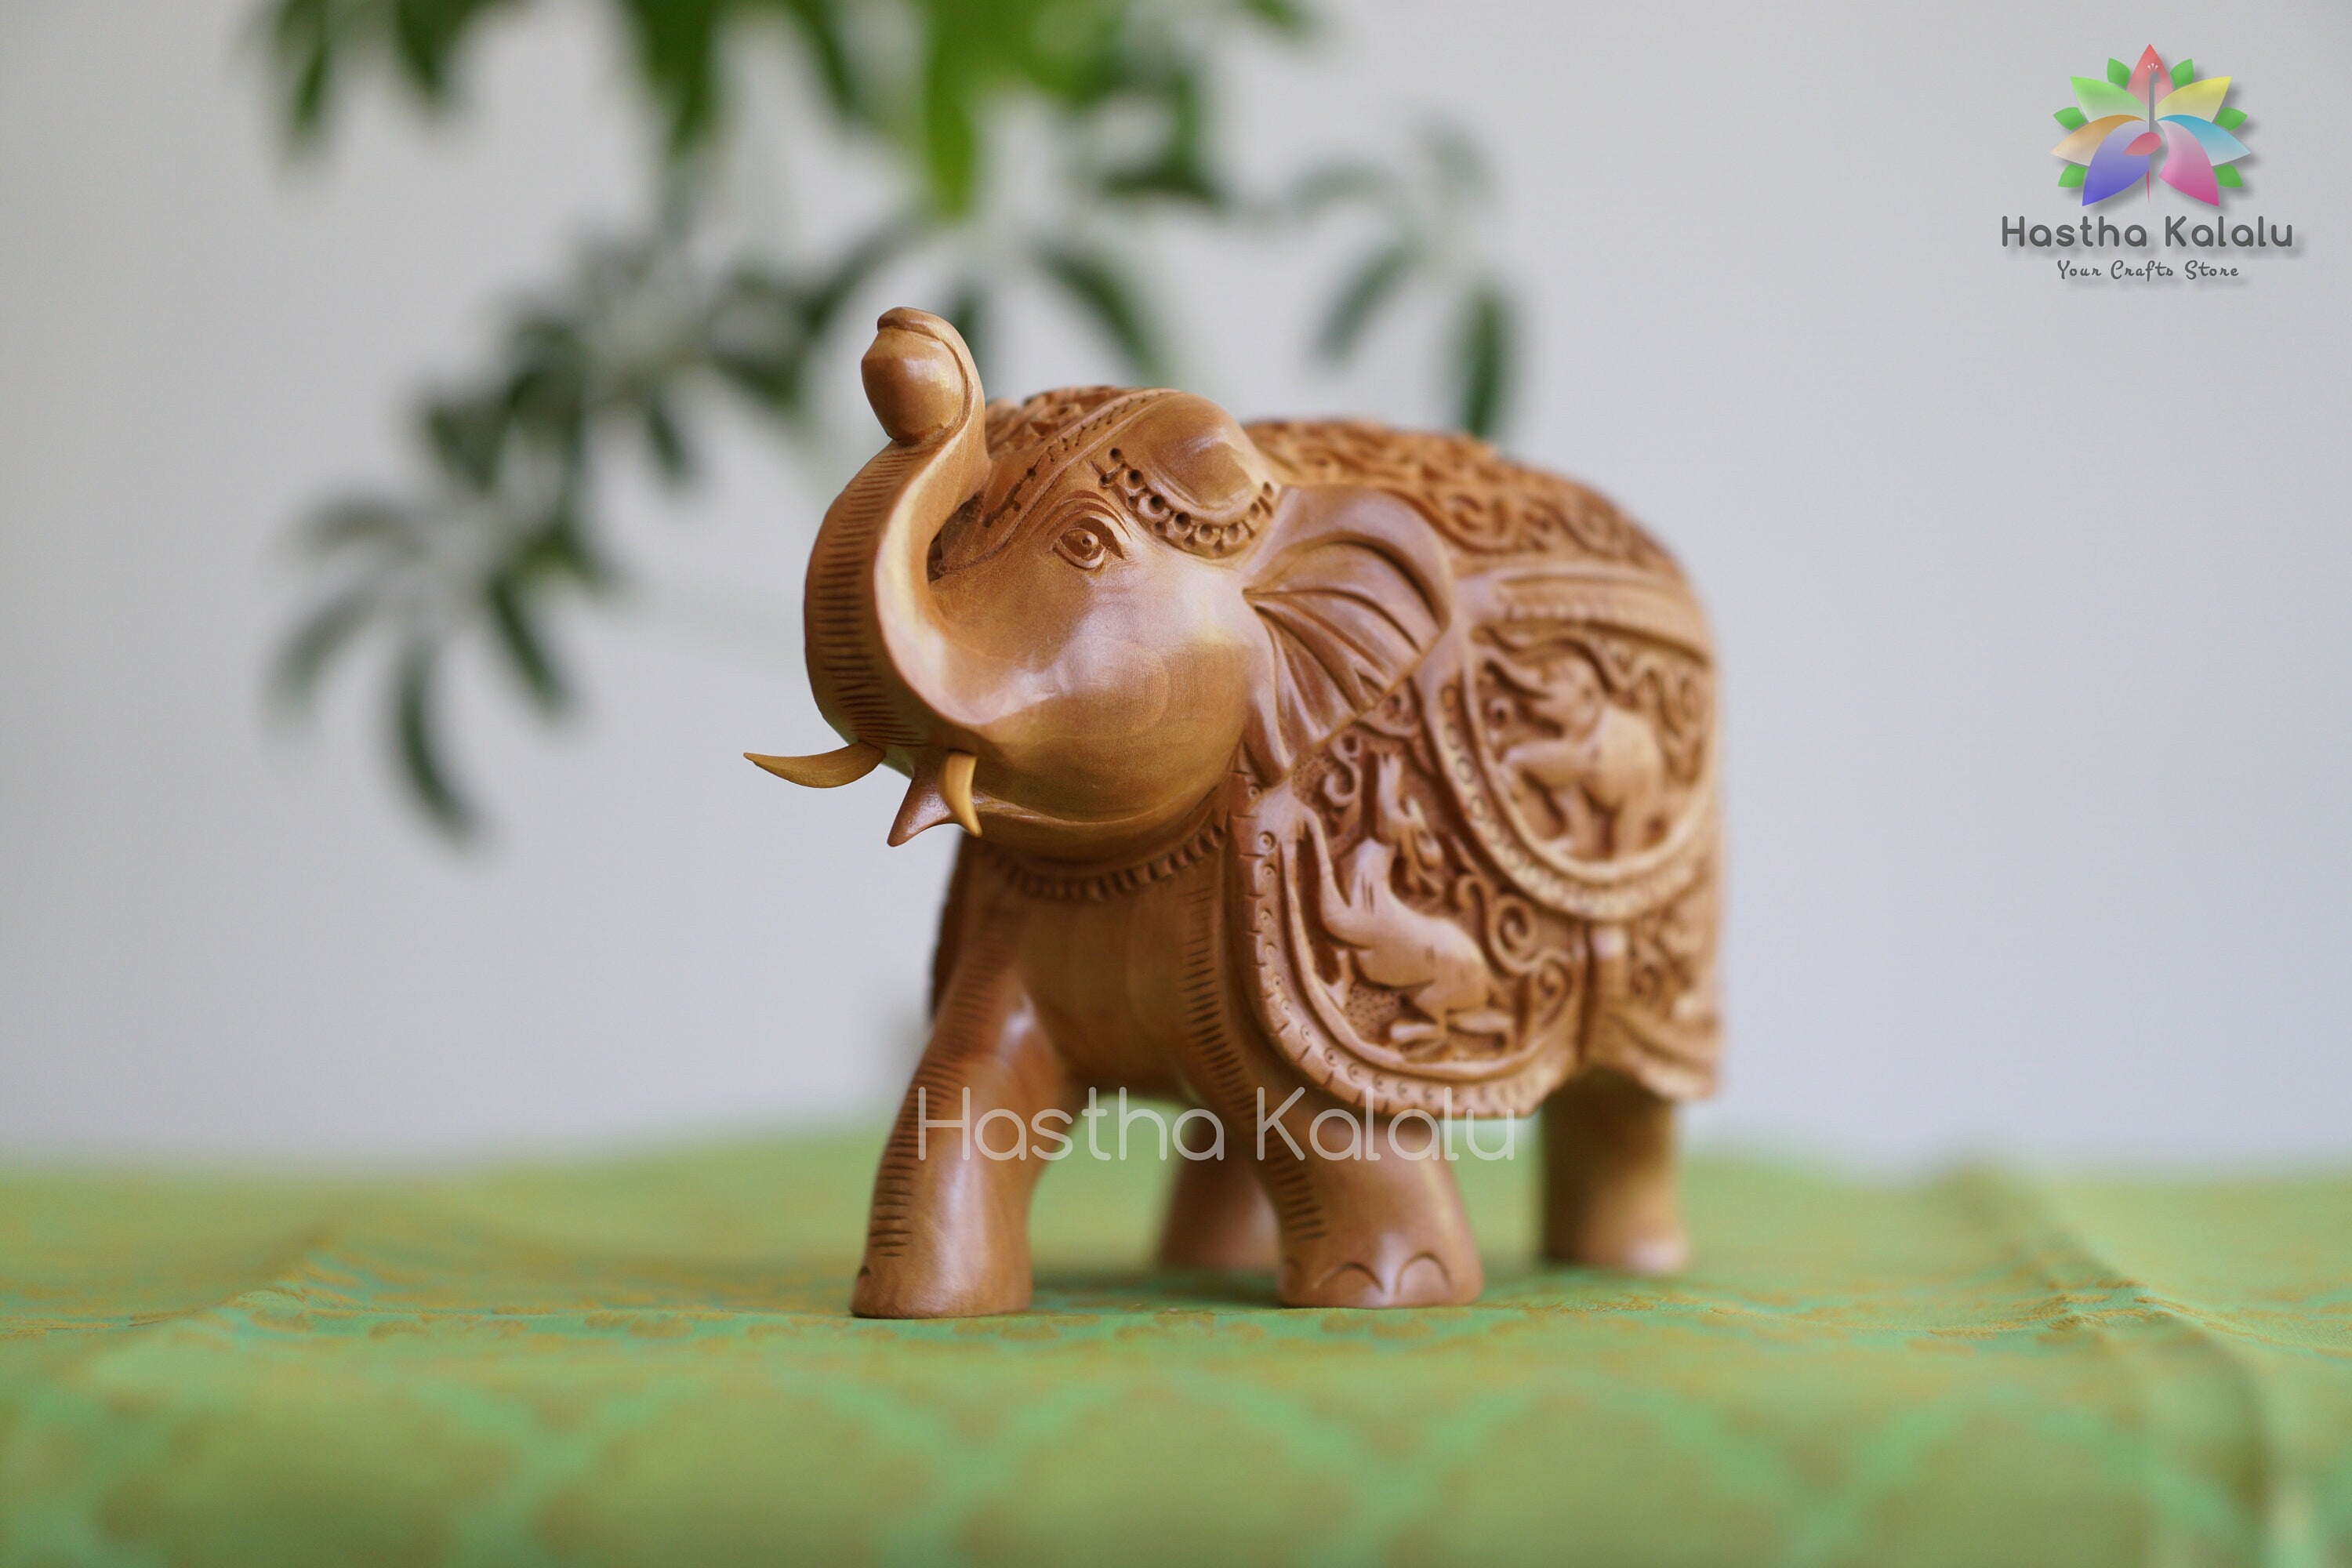 Indian Hand Carved Wooden Elephant Sculpture in Shikar Work